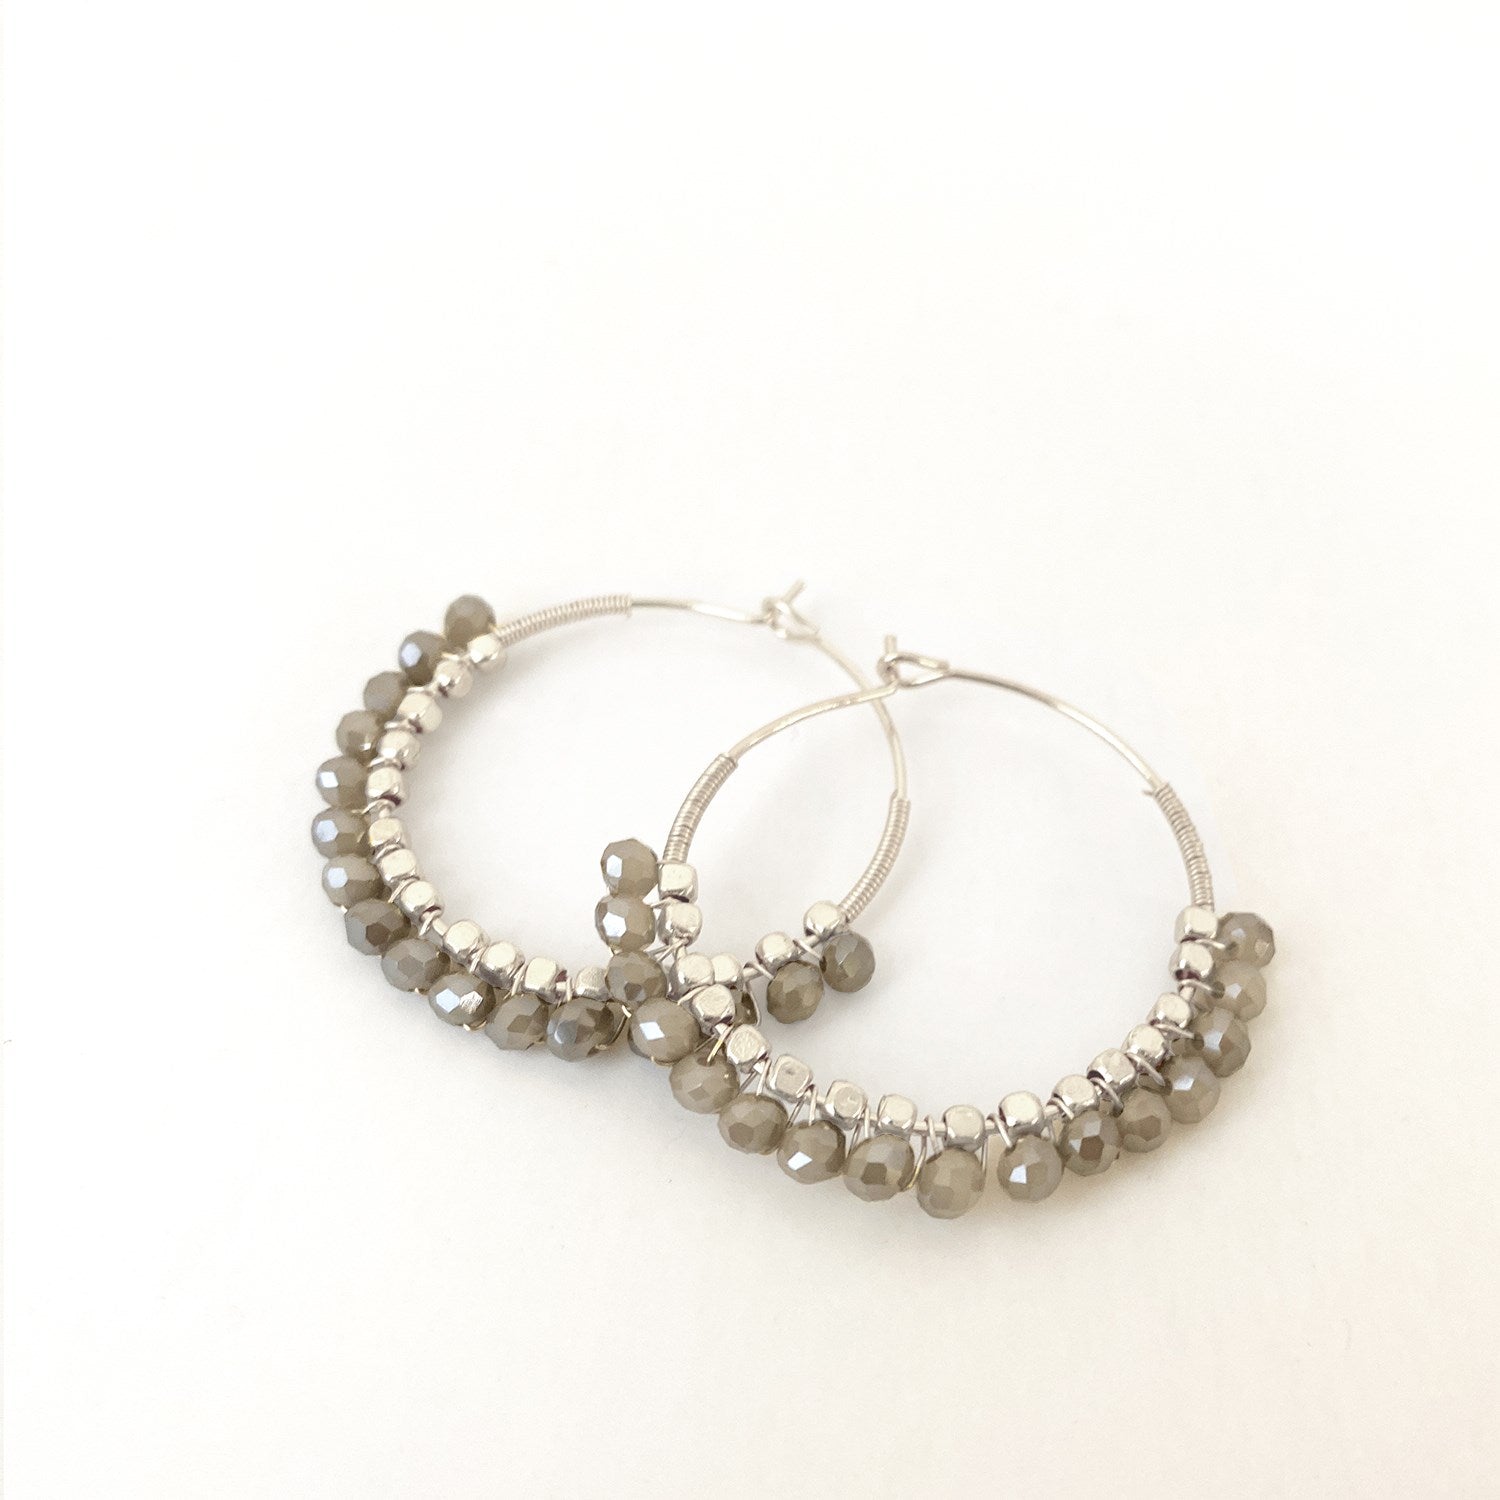 Hooped Earrings with Mini Glass Beads